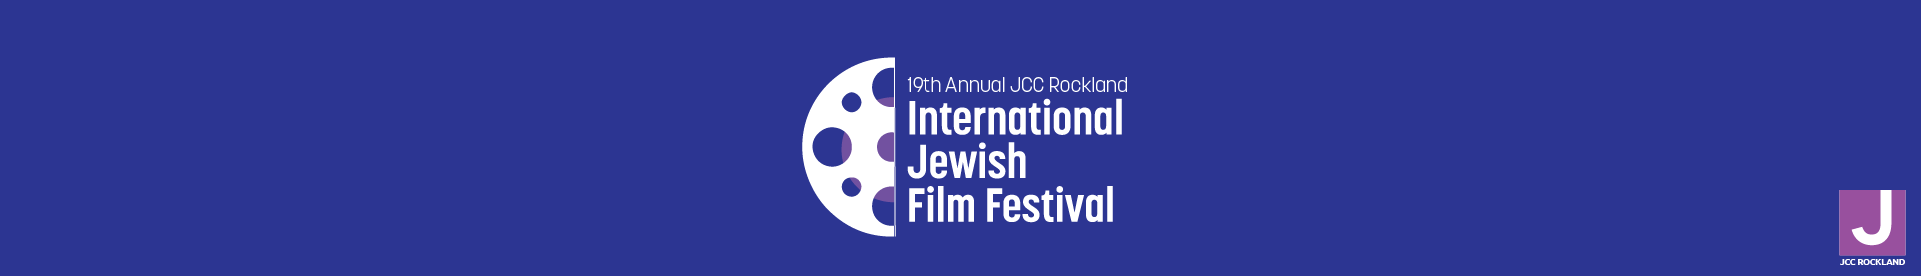 JCC Rockland 19th Annual International Jewish Film Festival